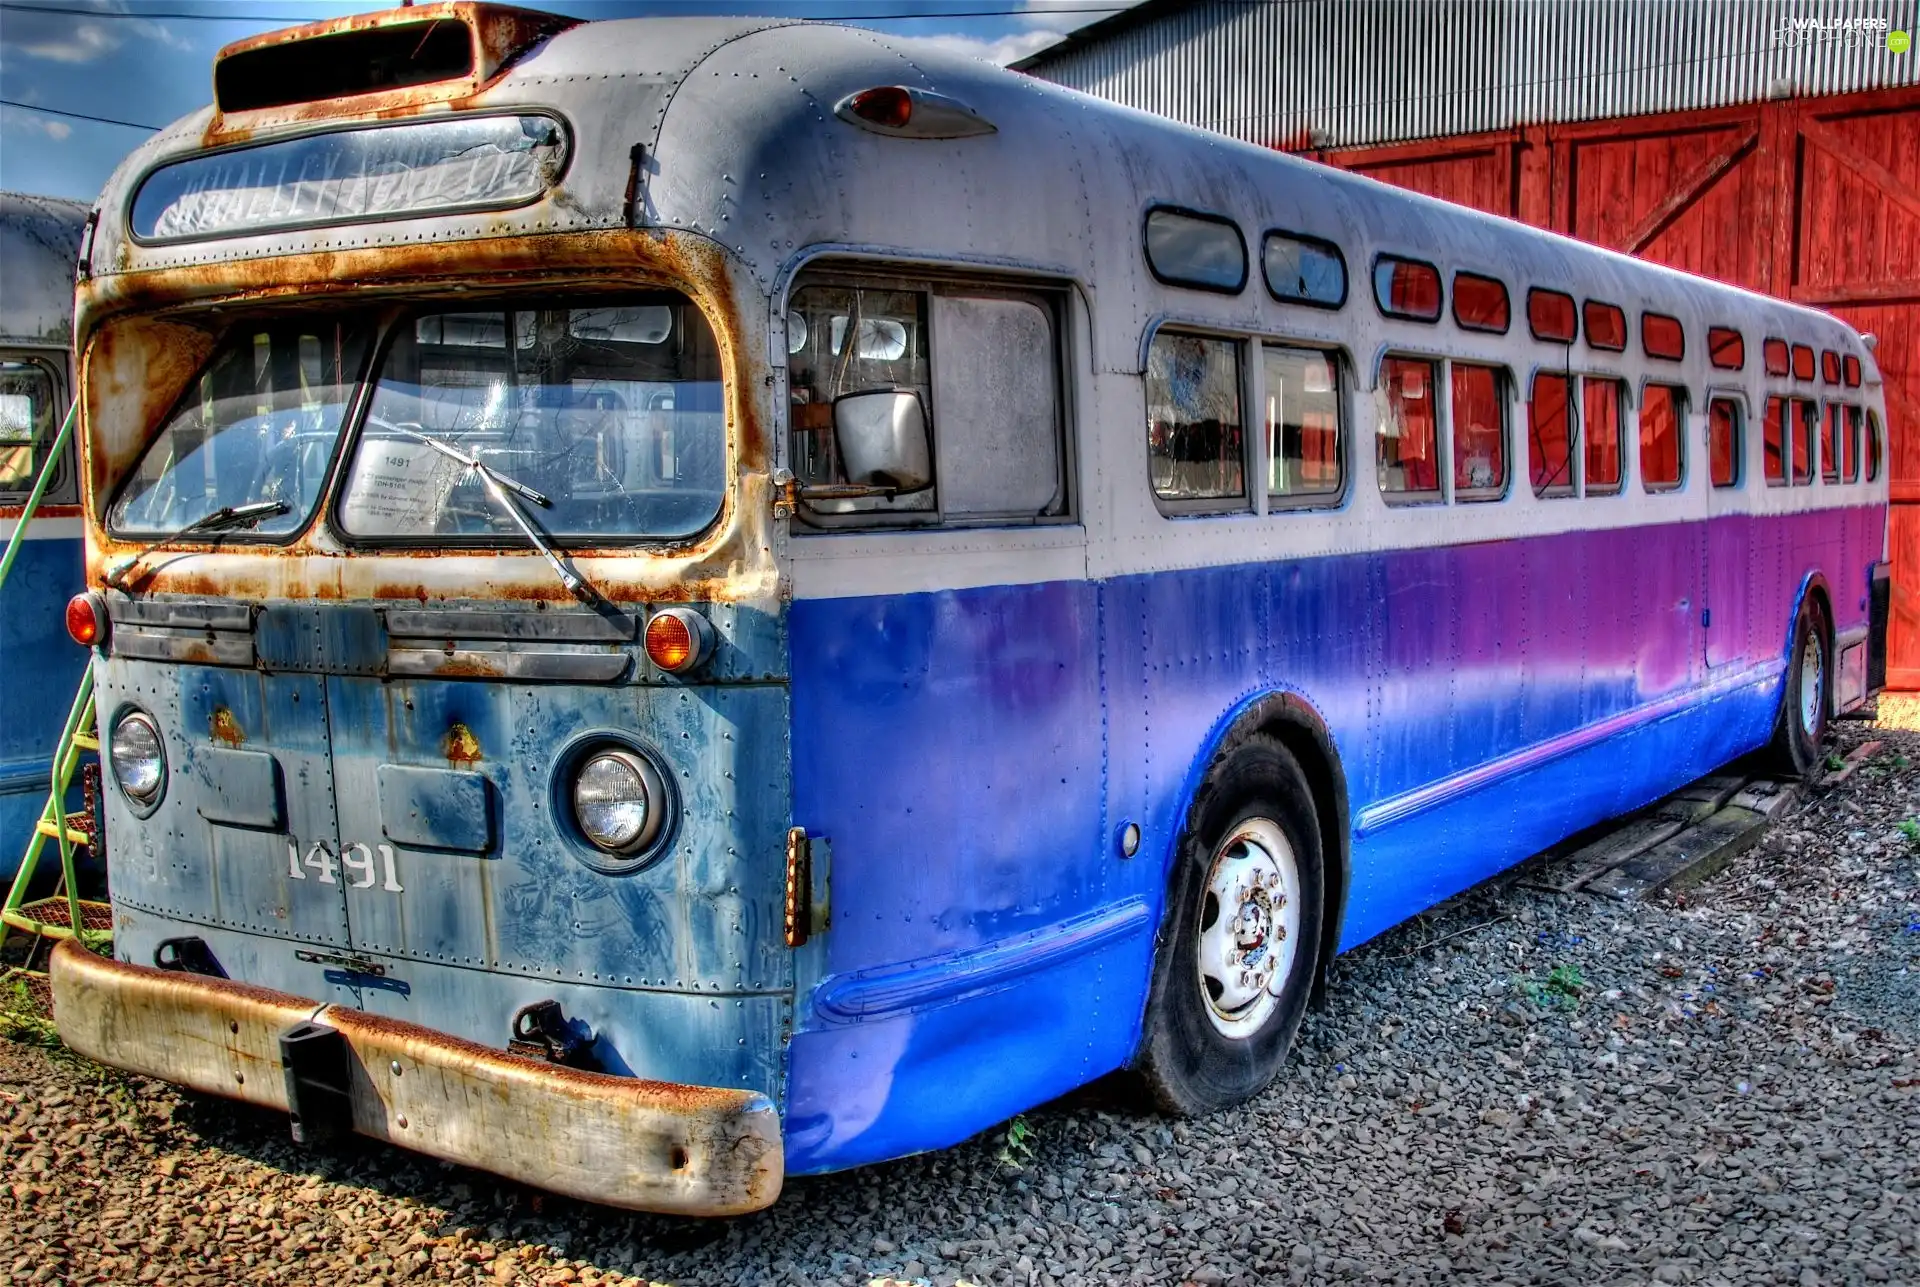 Old car, bus